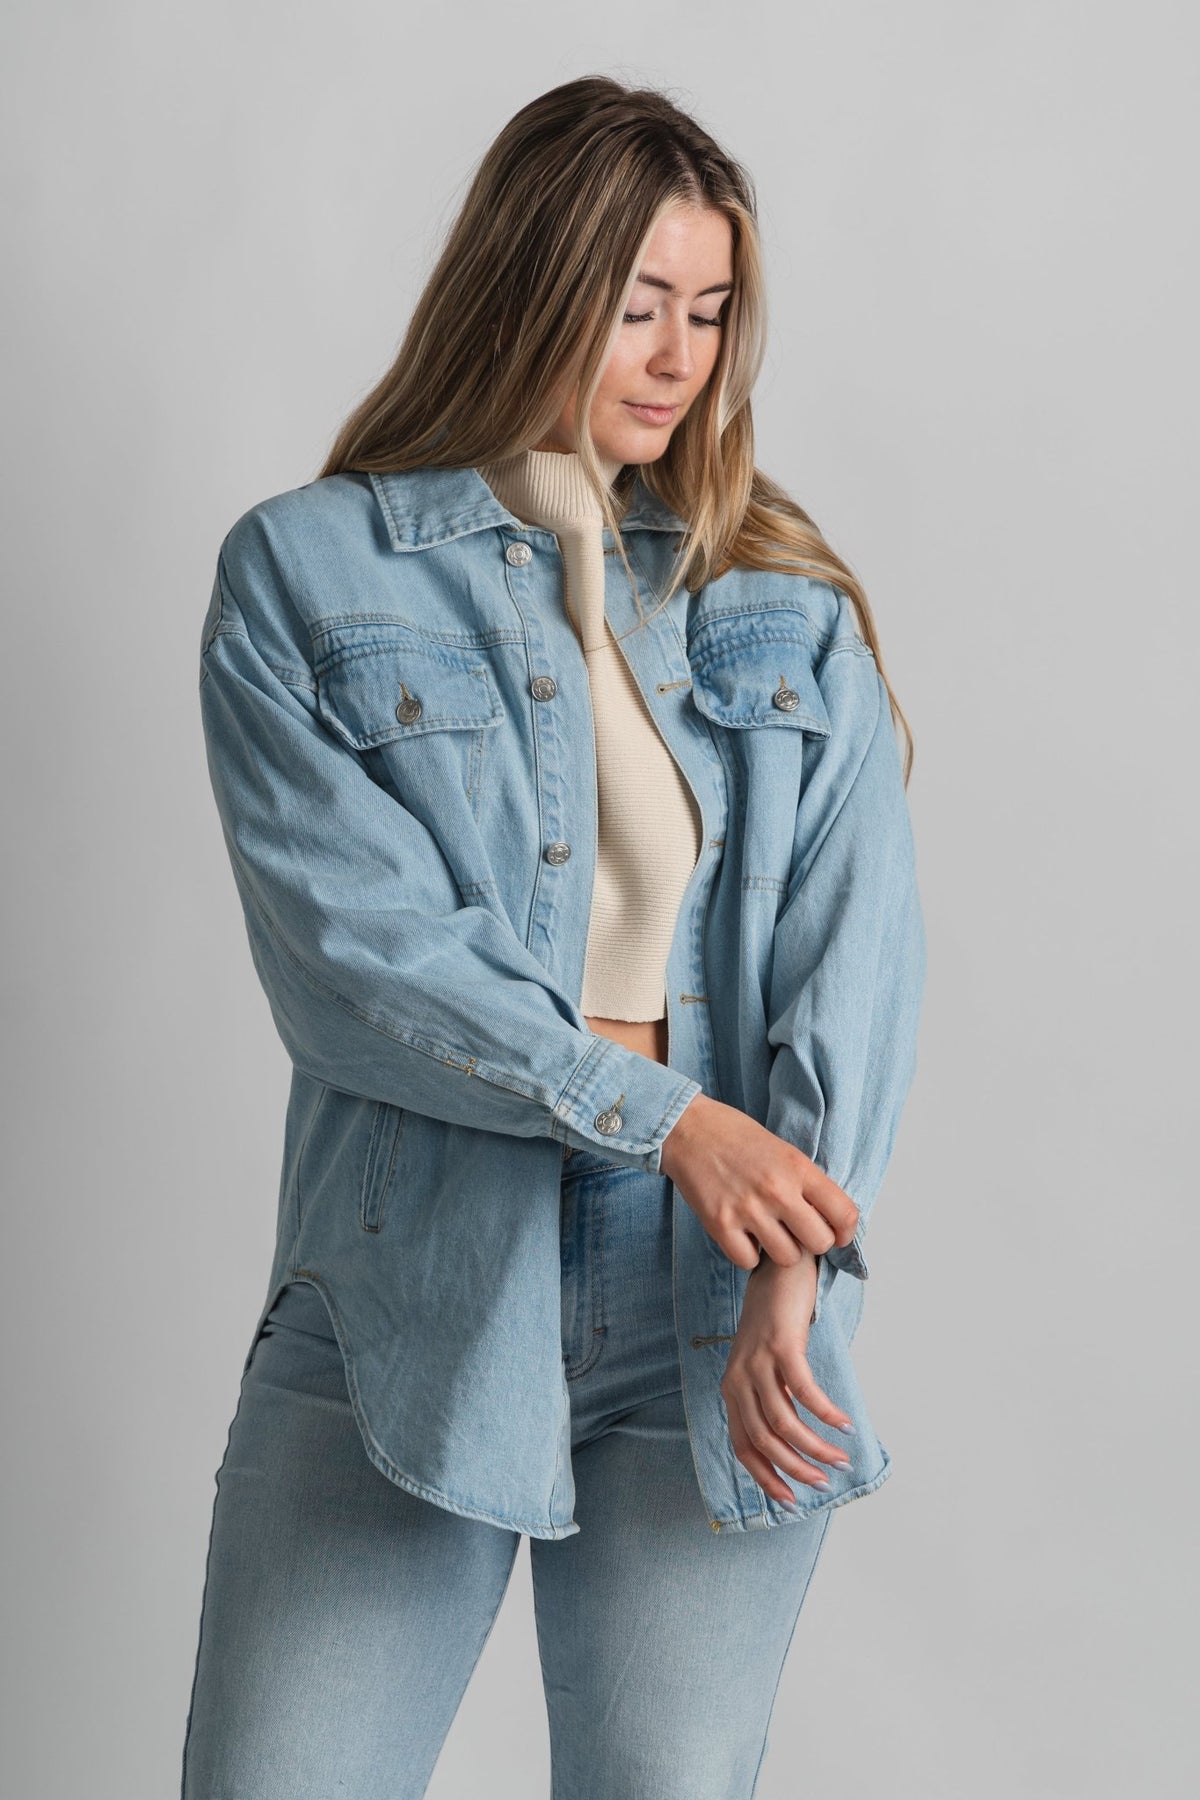 Denim shirt jacket light denim – Trendy Jackets | Cute Fashion Blazers at Lush Fashion Lounge Boutique in Oklahoma City